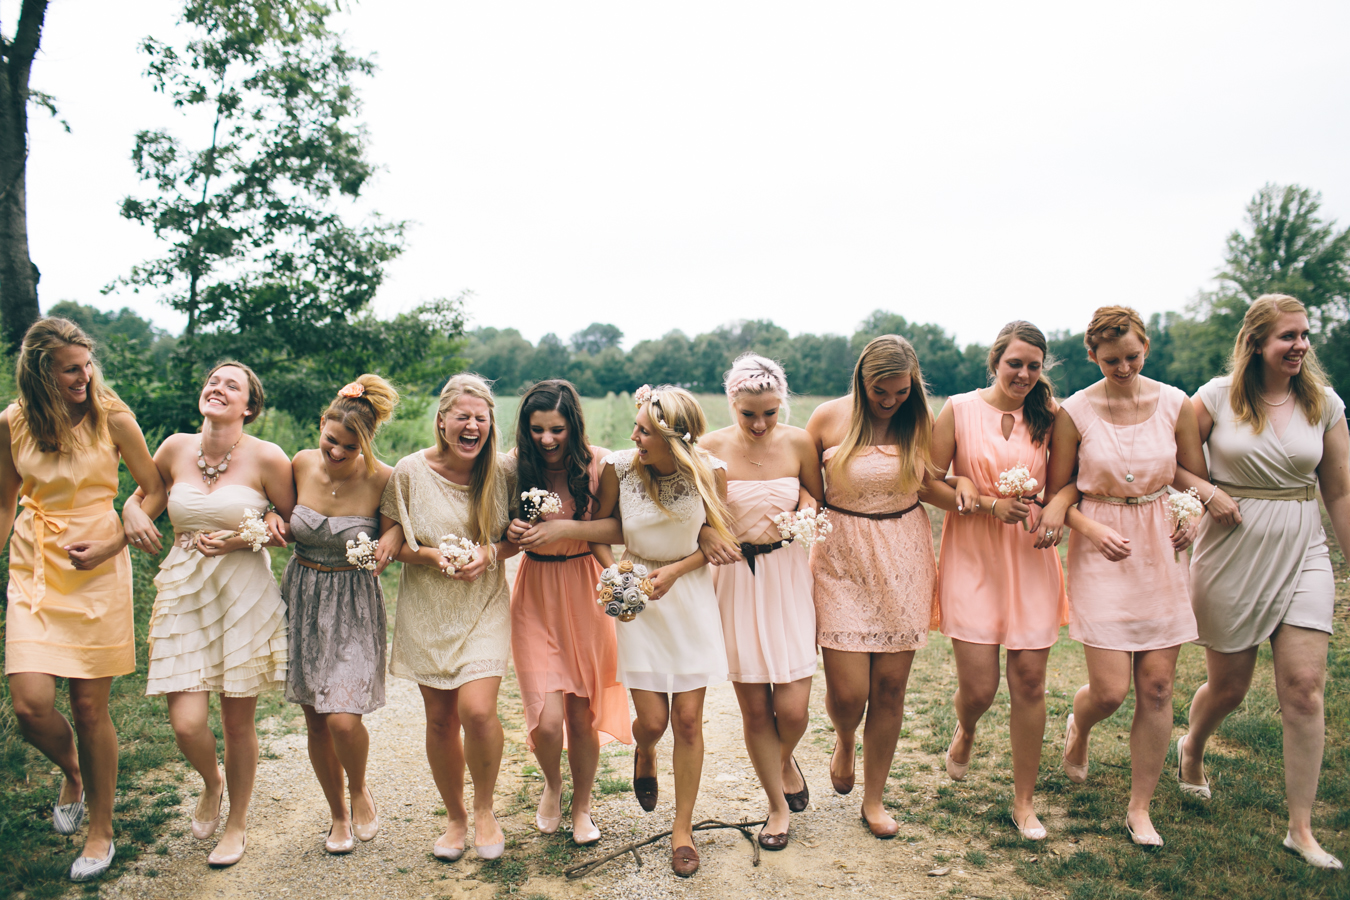 Diy mismatched bridesmaids dresses